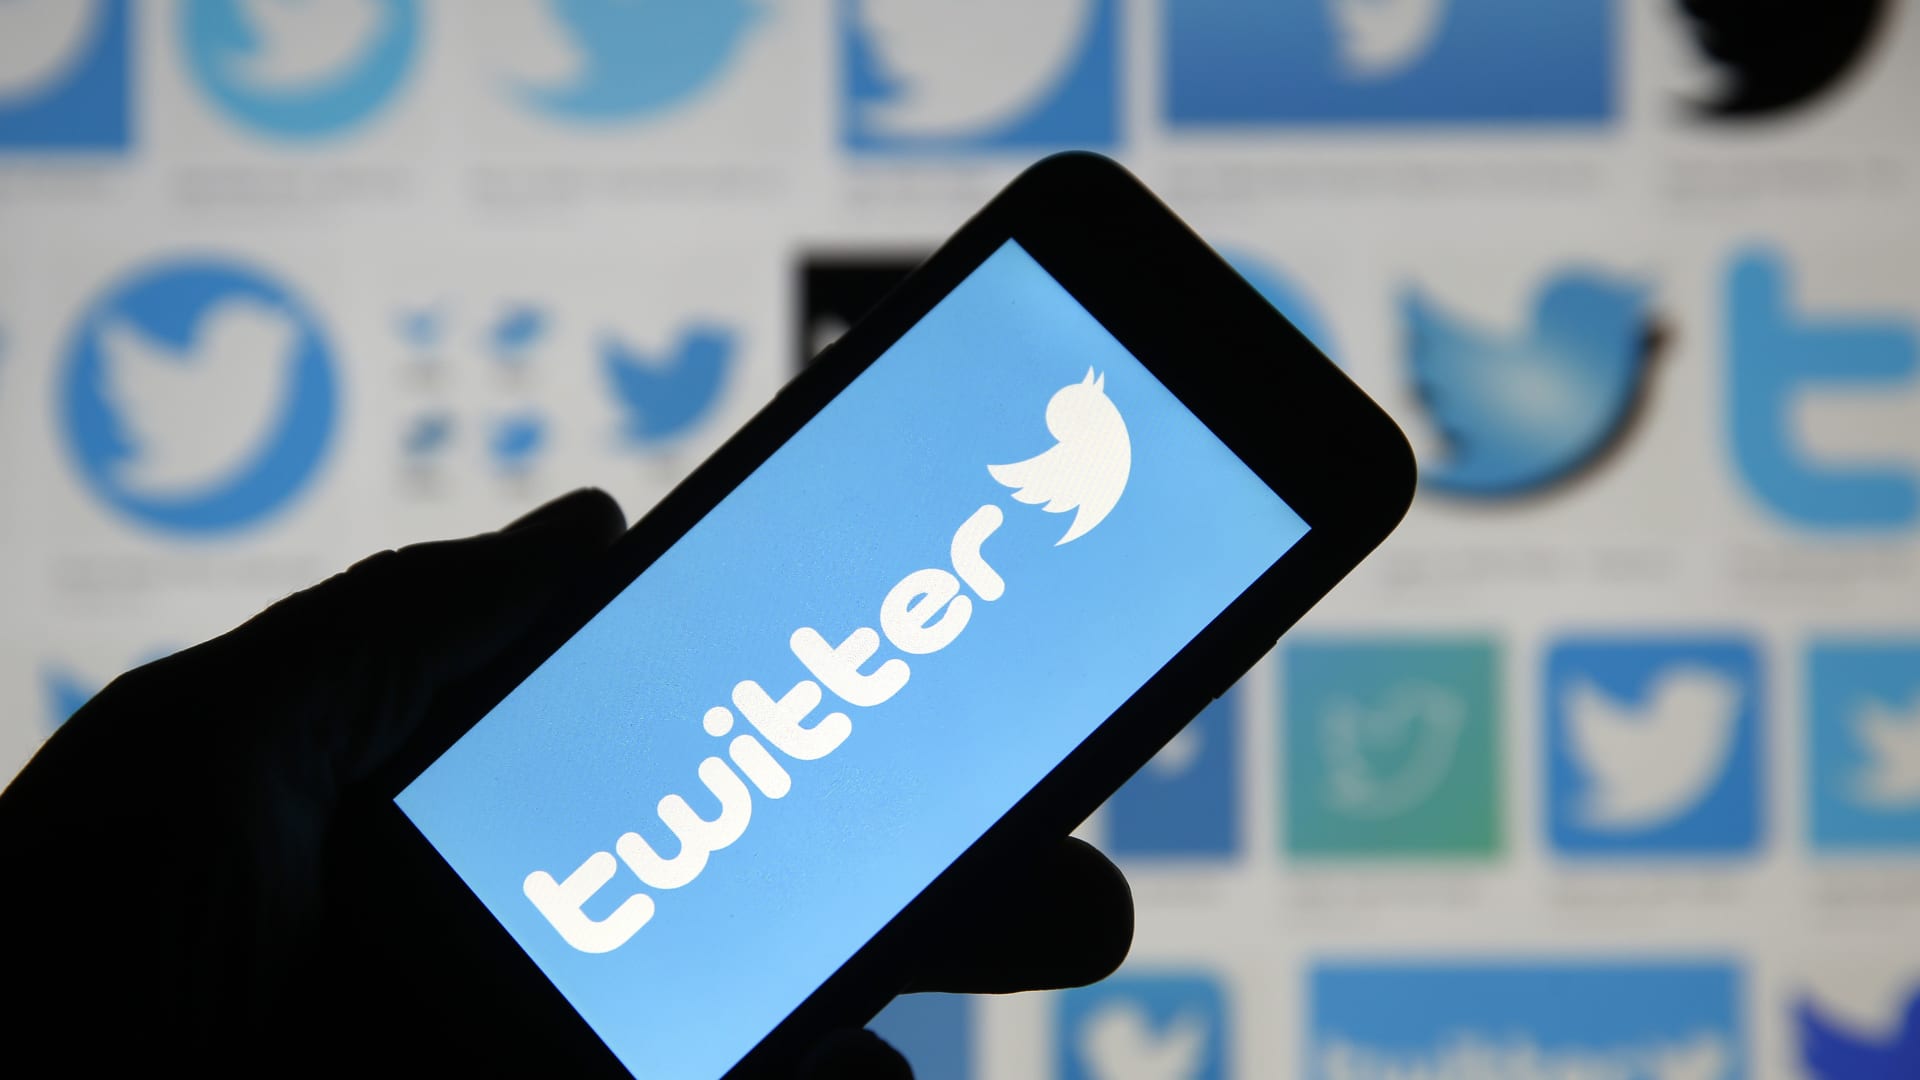 Twitter, Bank of America, Charles Schwab and more